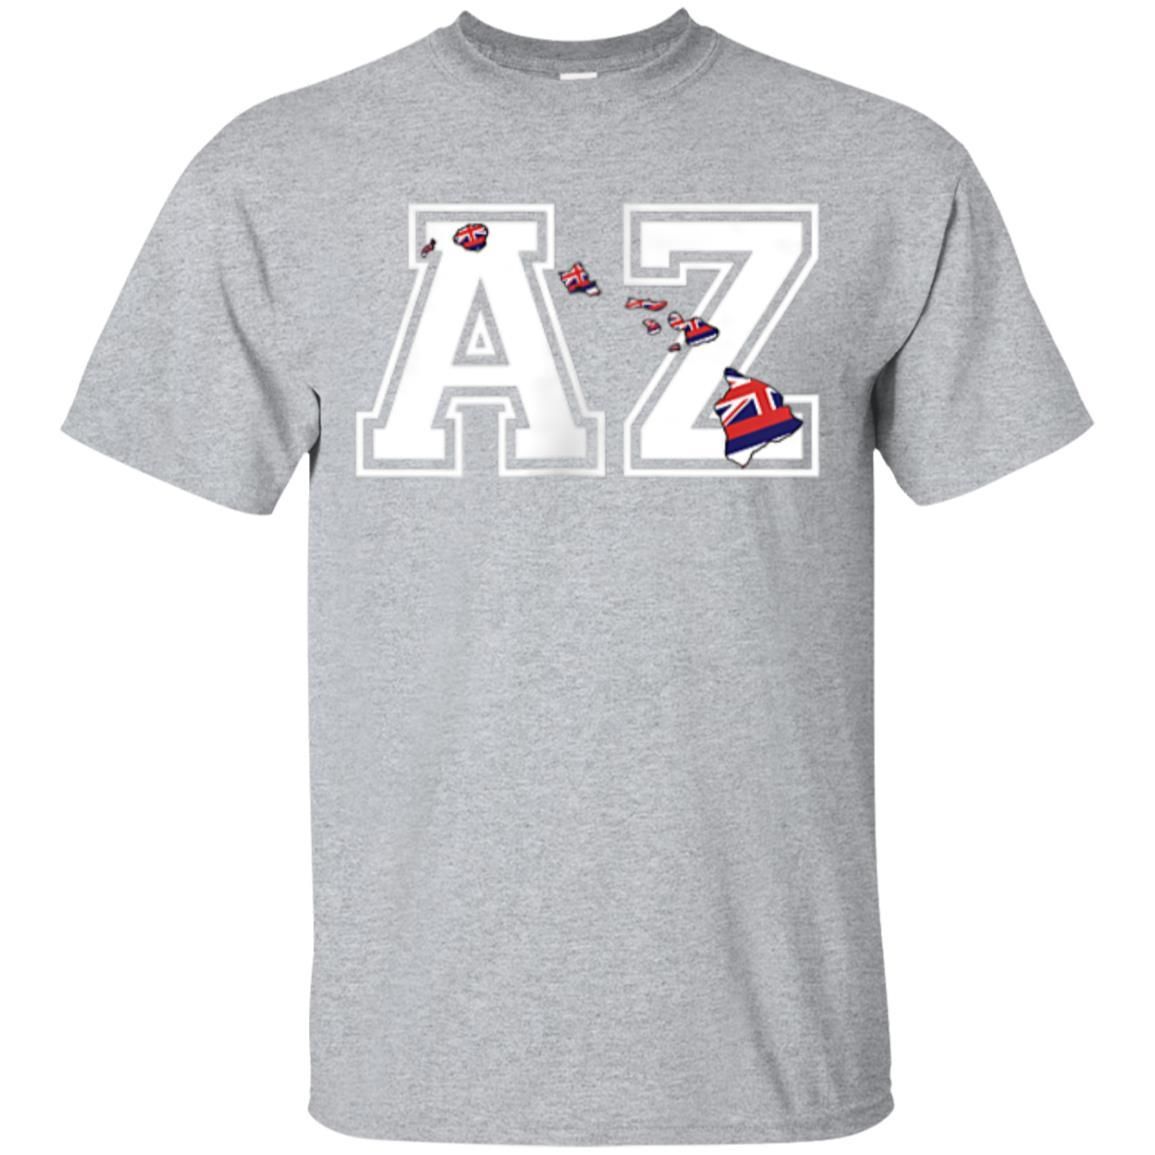 Hawaiians In Arizona Shirt Front And Back Design